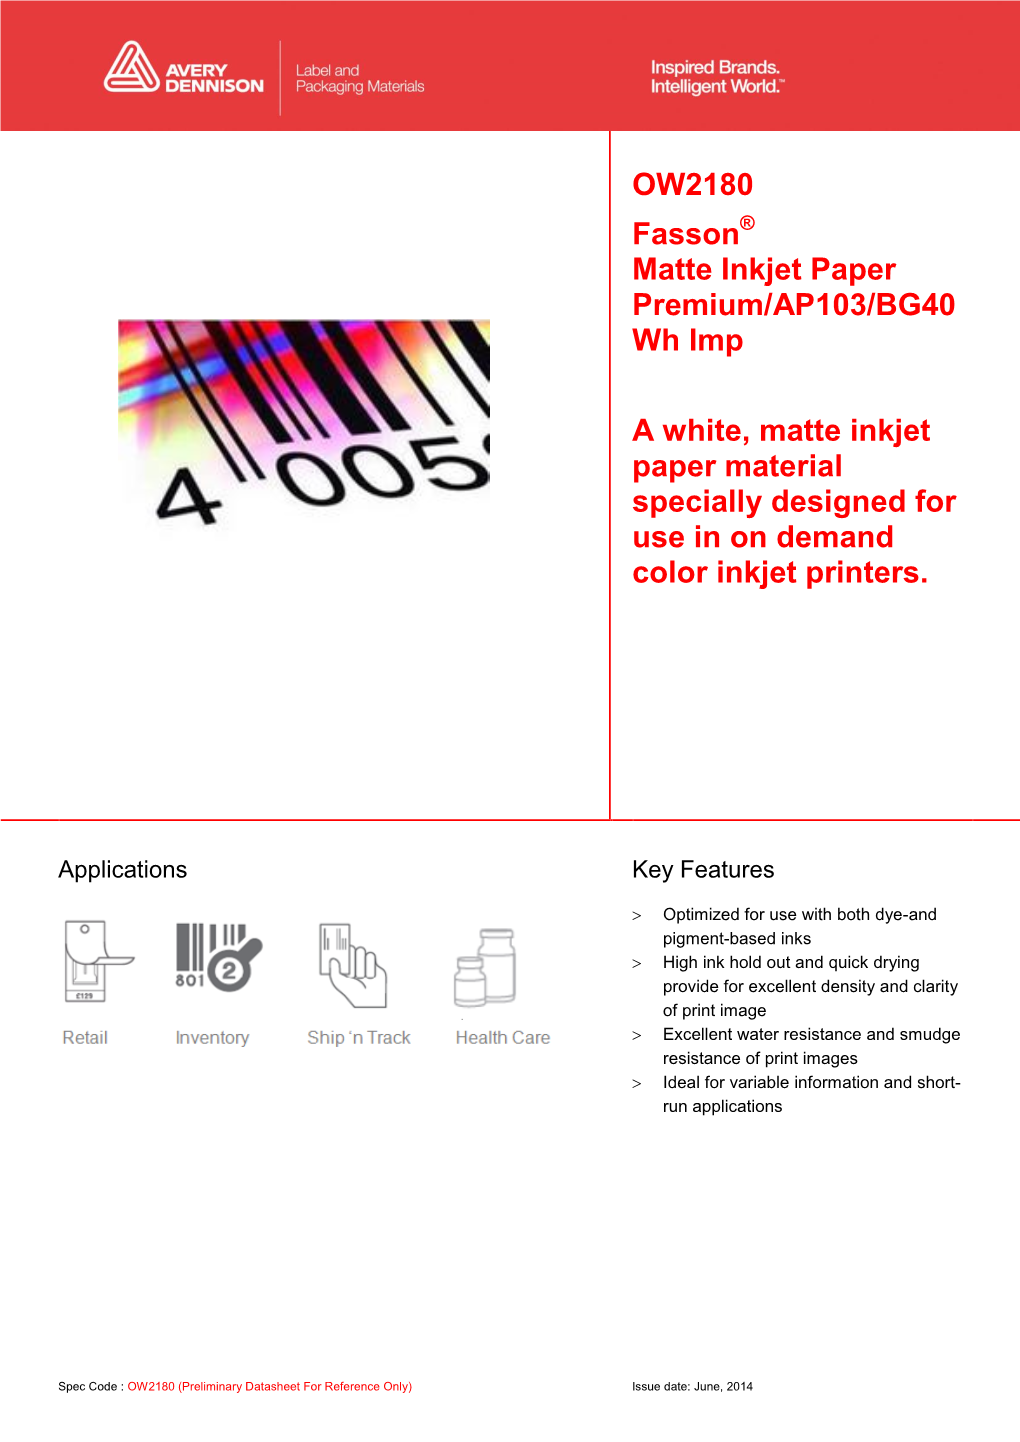 OW2180 Fasson Matte Inkjet Paper Premium/AP103/BG40 Wh Imp A